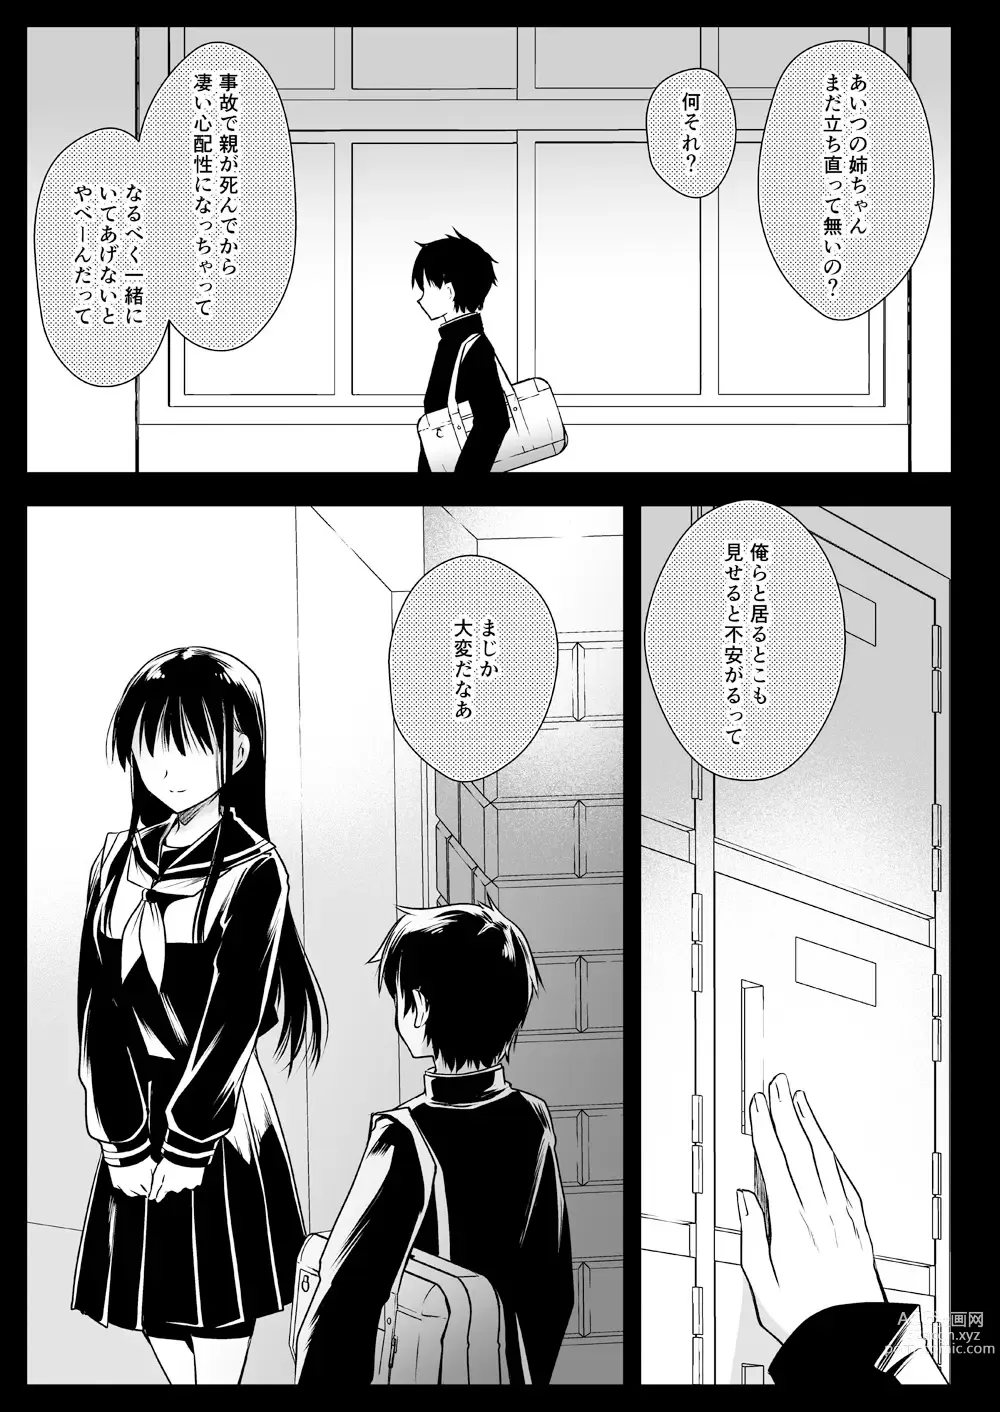 Page 28 of manga Kyou izon Kyoudai